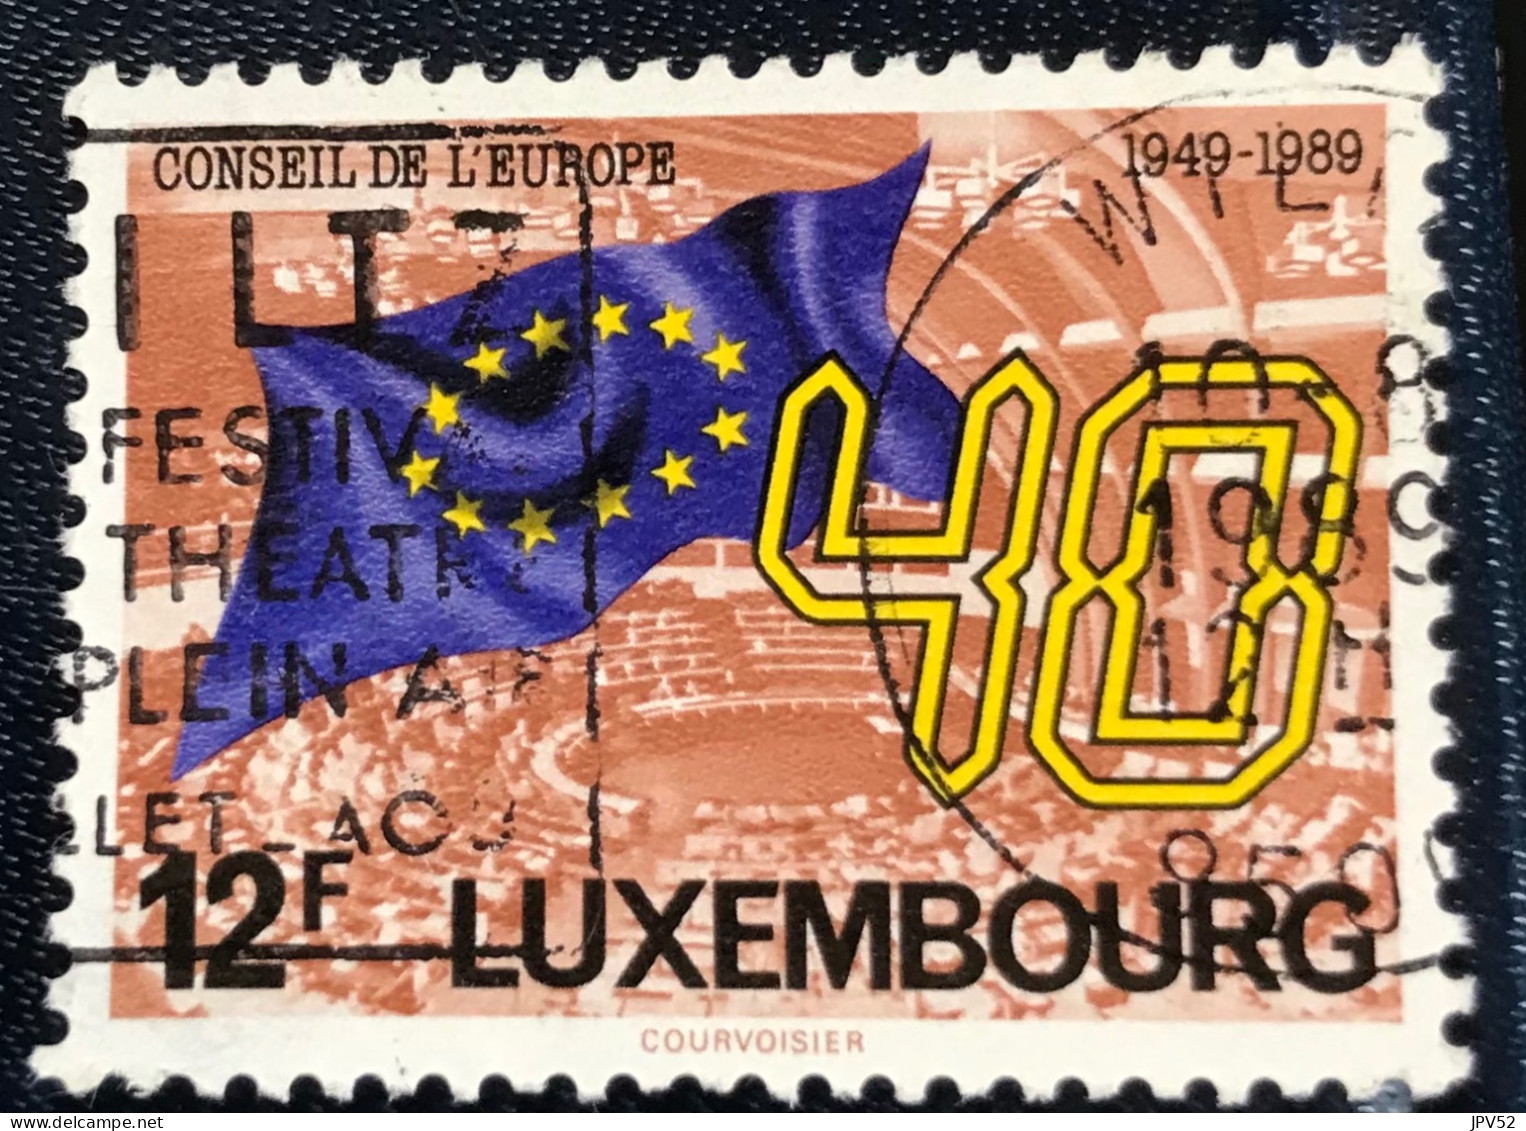 Luxembourg - Luxemburg - C18/30 - 1989 - (°)used - Michel 1222 - 40j Raad Van Europa - Gebraucht